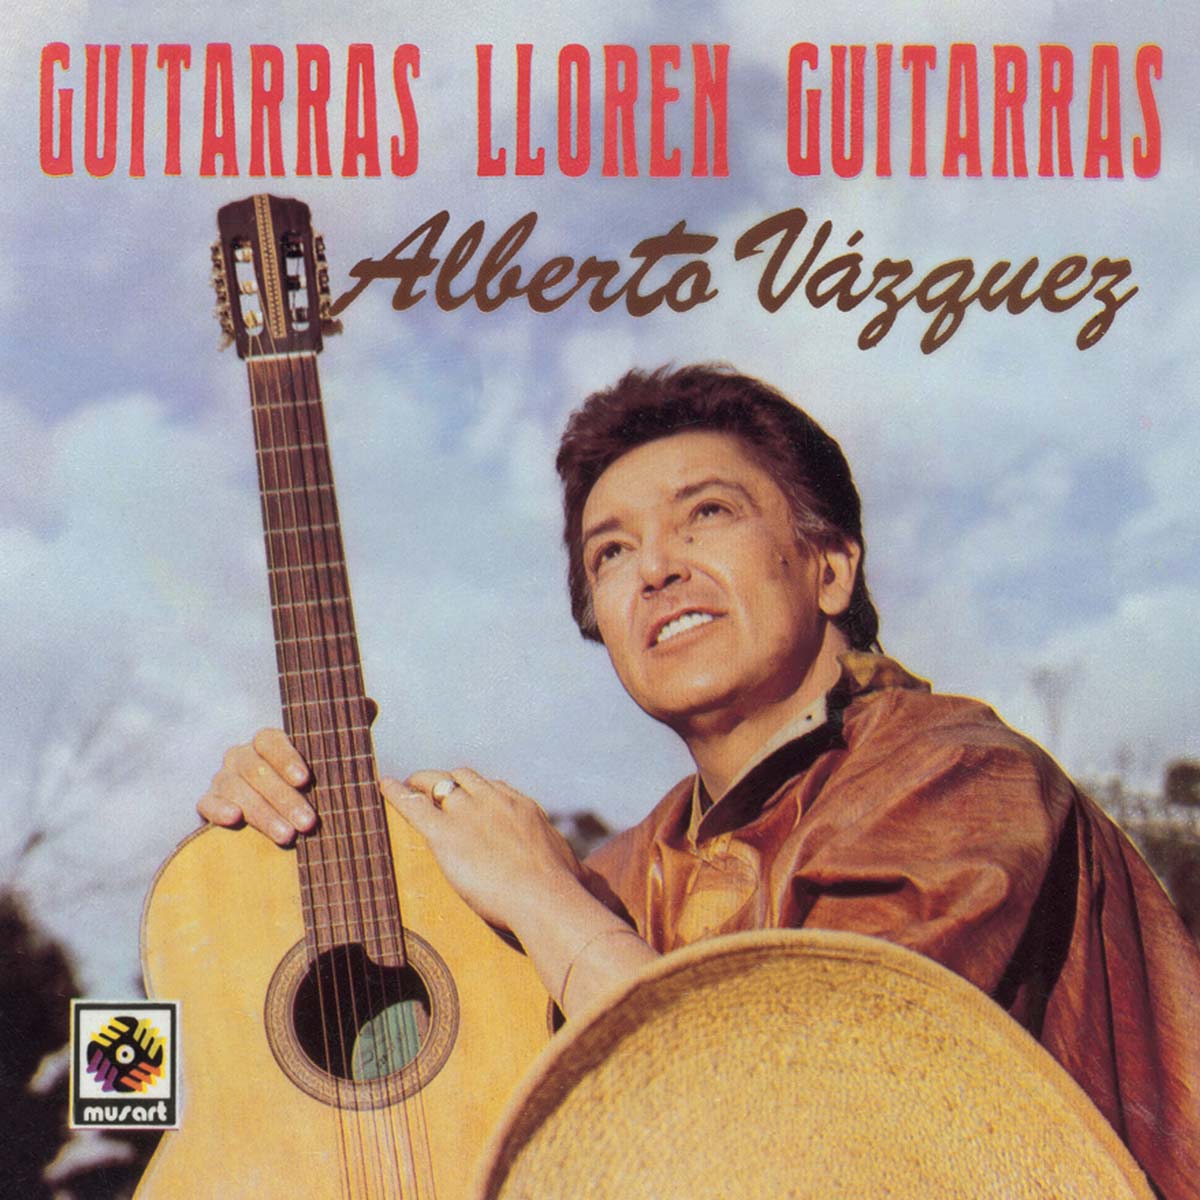 Featured Image for “Guitarras Lloren Guitarras”